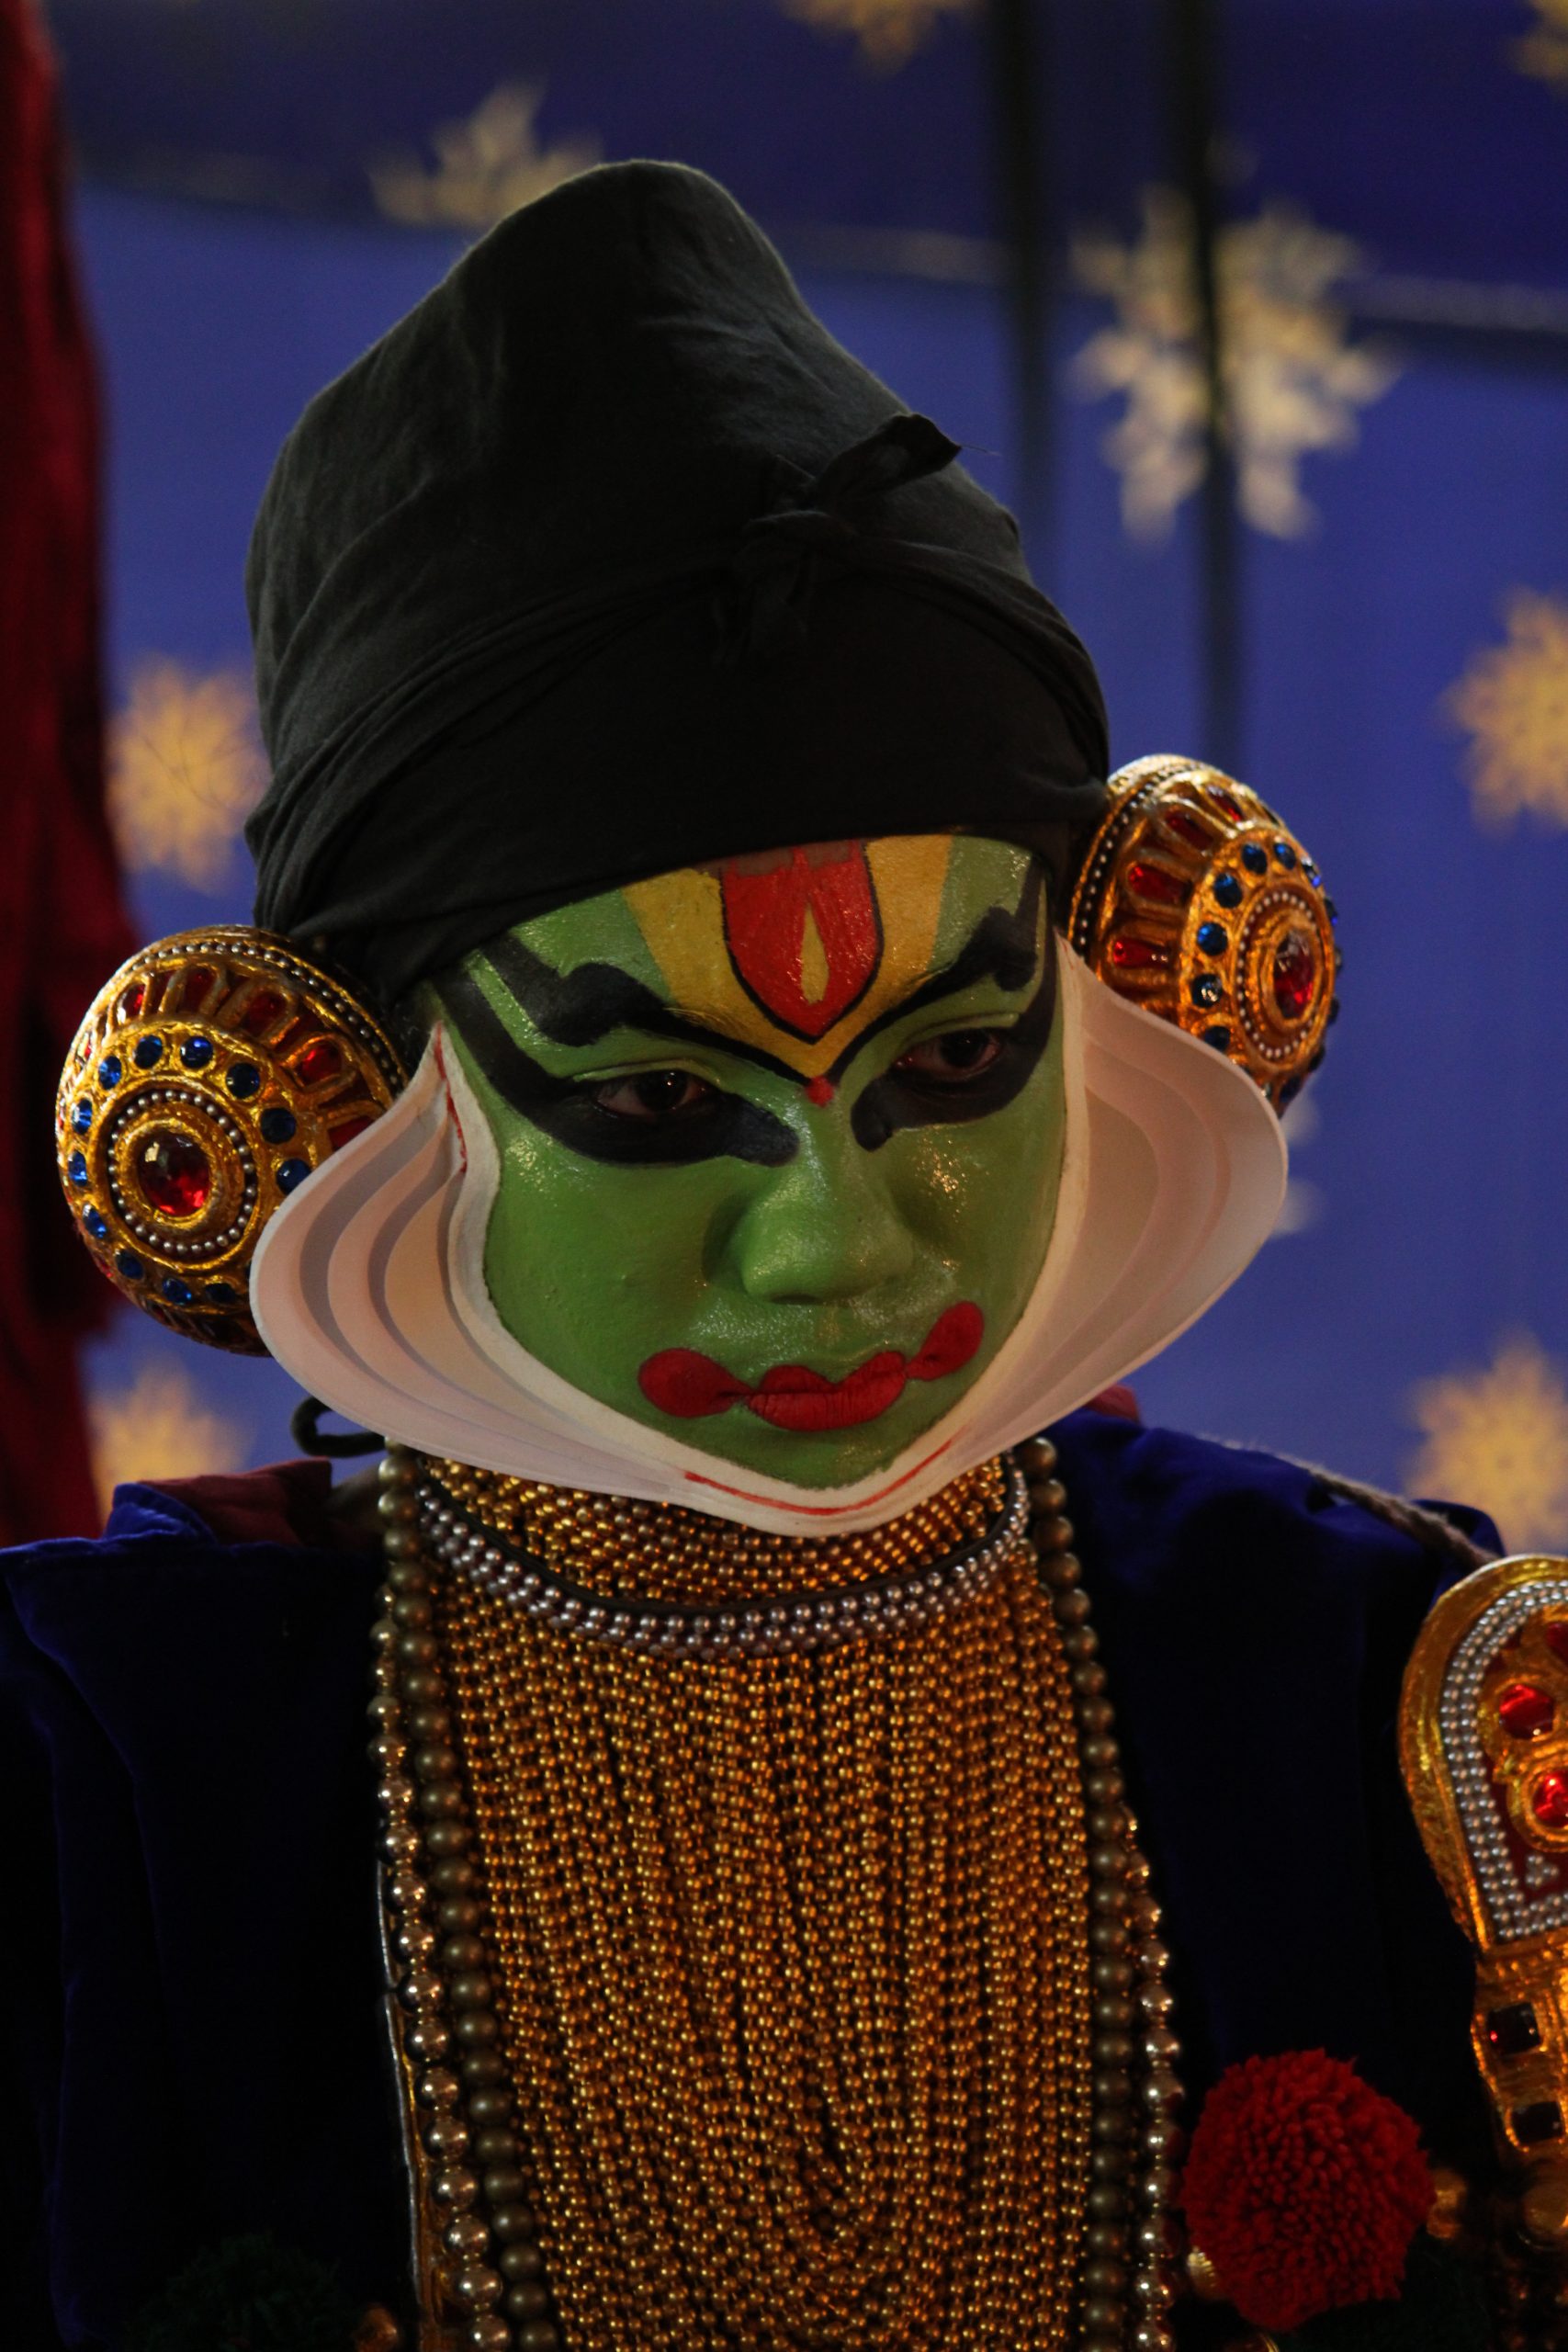 A Kathakali dance artist